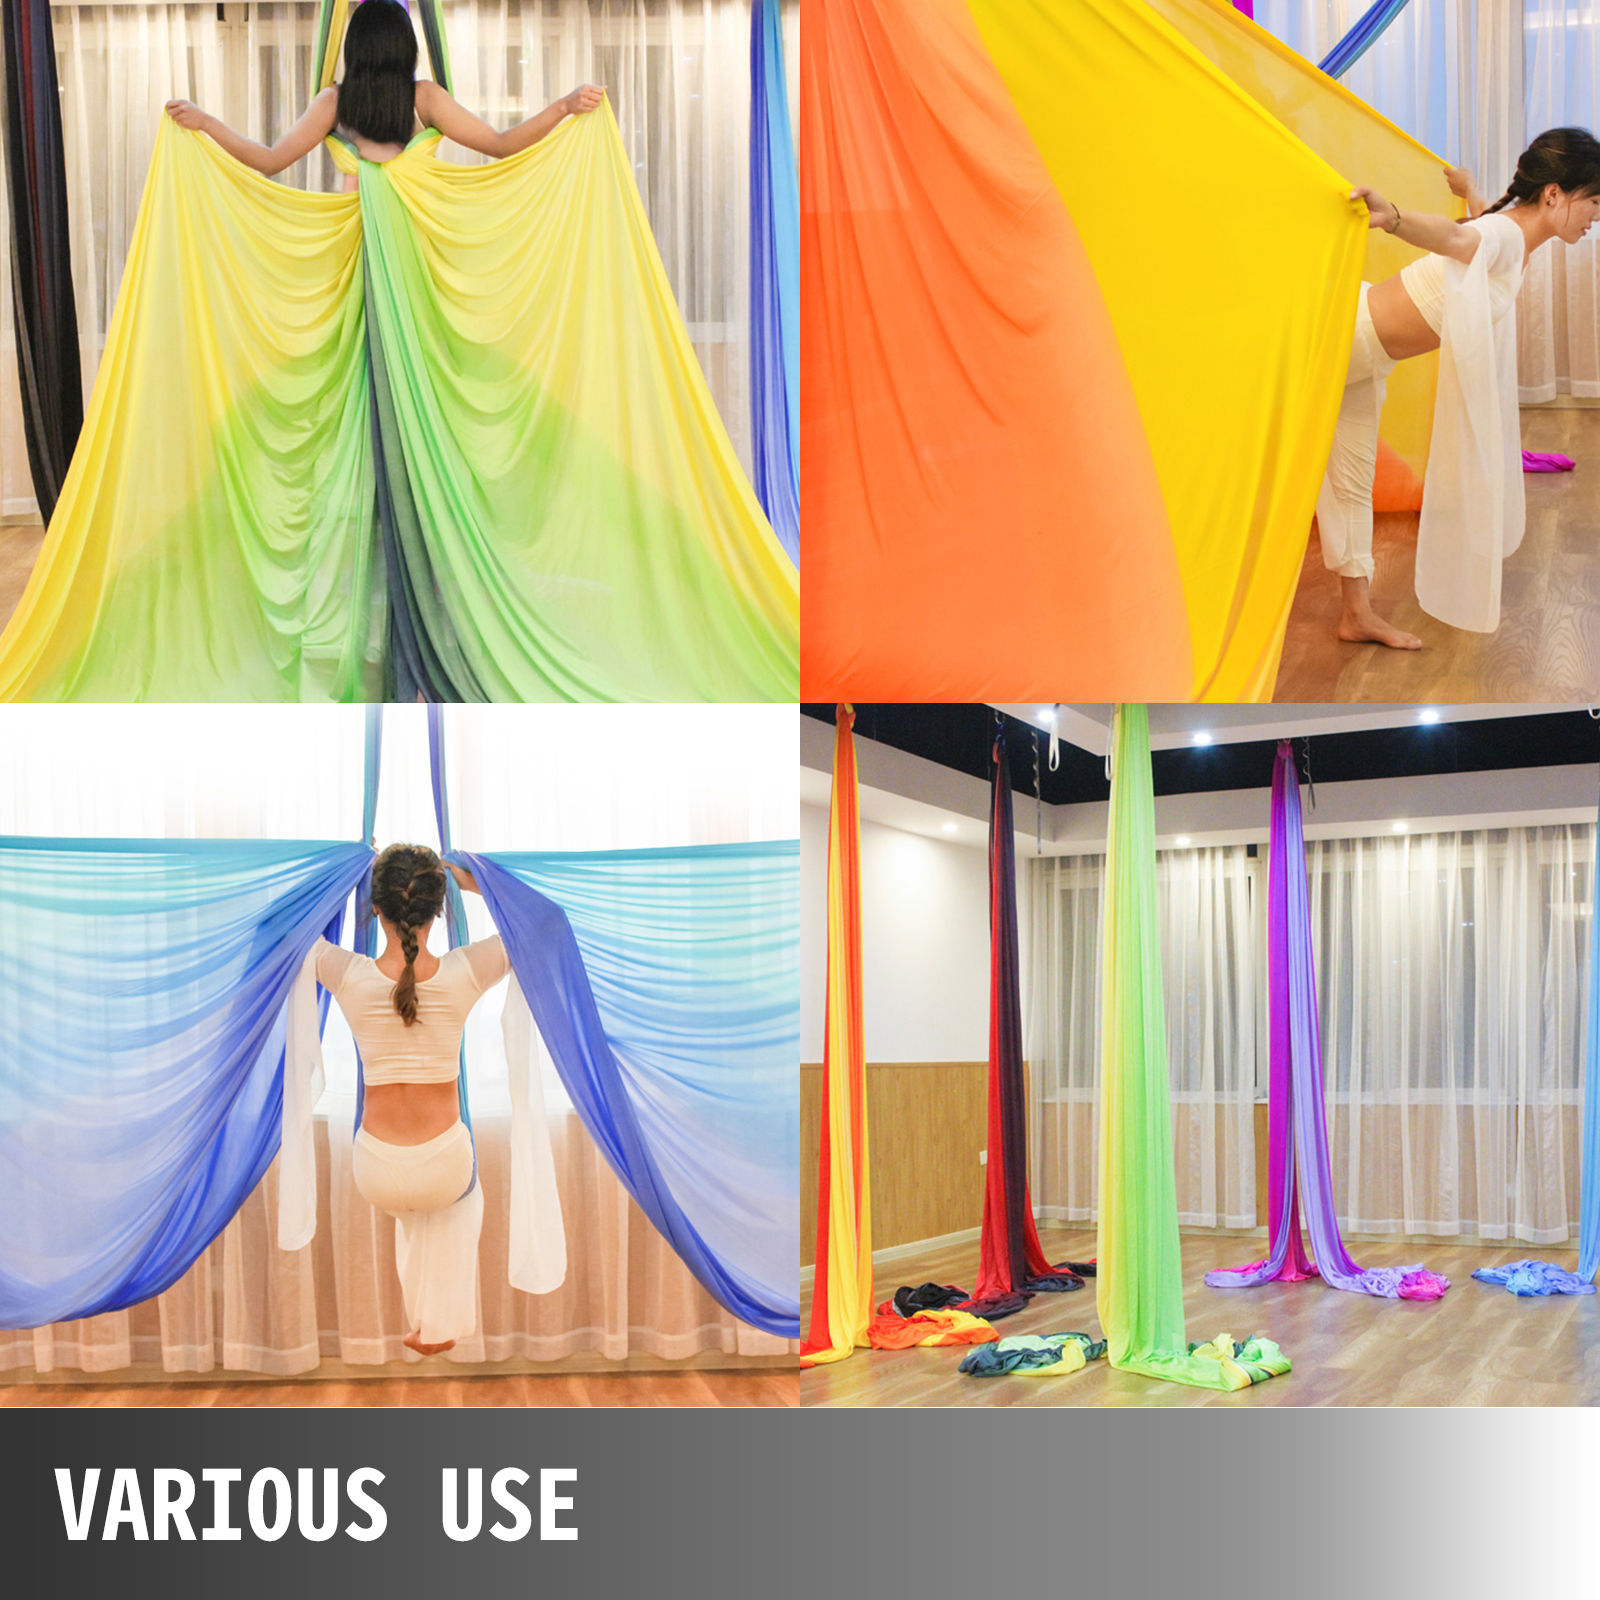 Aerial Yoga Hammock Kit -5.5 Yards Premium Aerial Silks Fabric with  Hardware, St